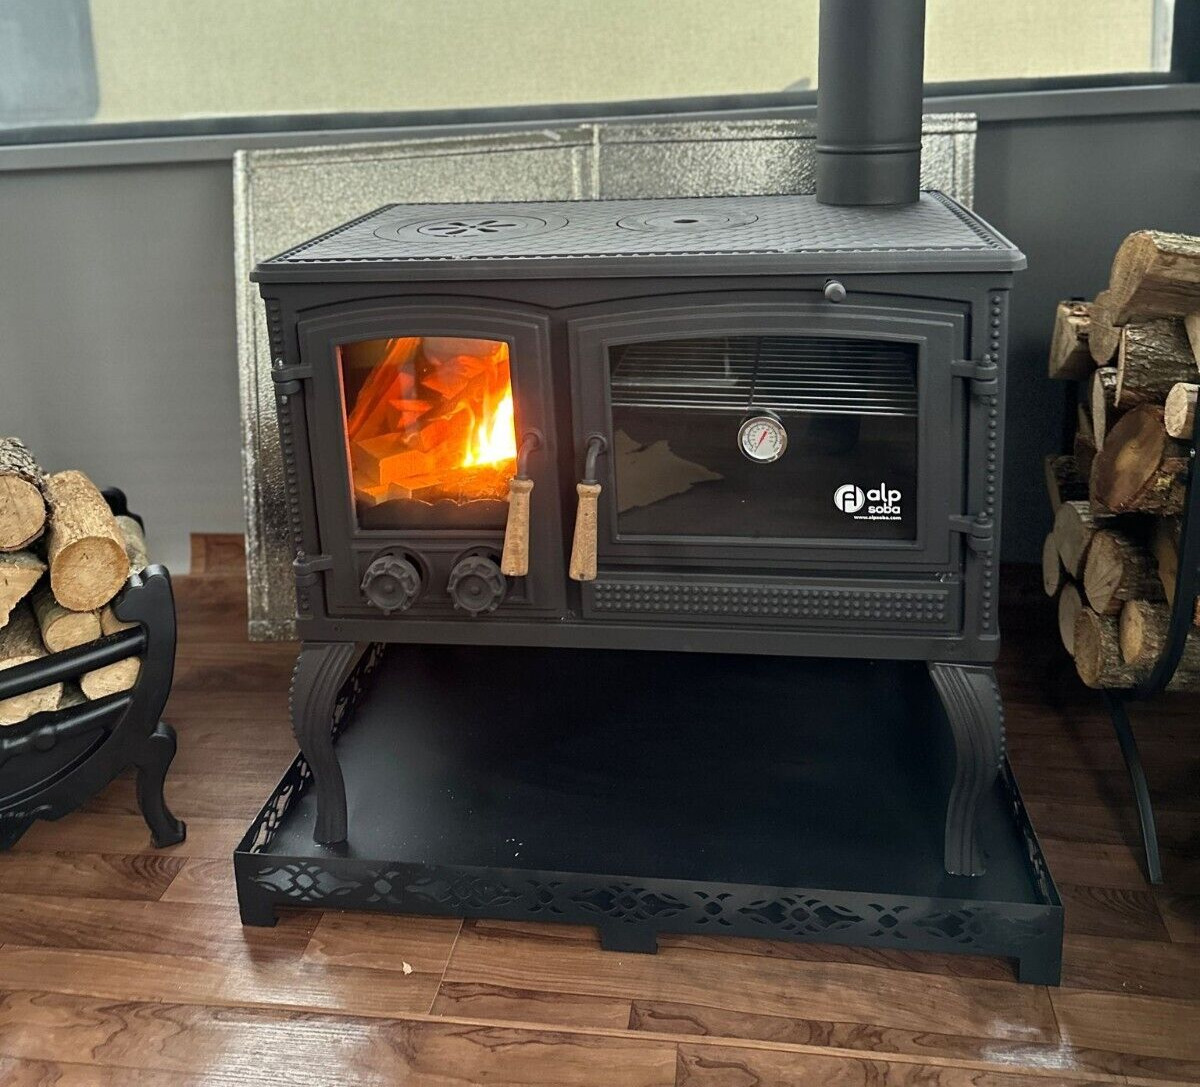 Cast iron wood burning stove, Wood cook stove, oven stove, kitchen stove